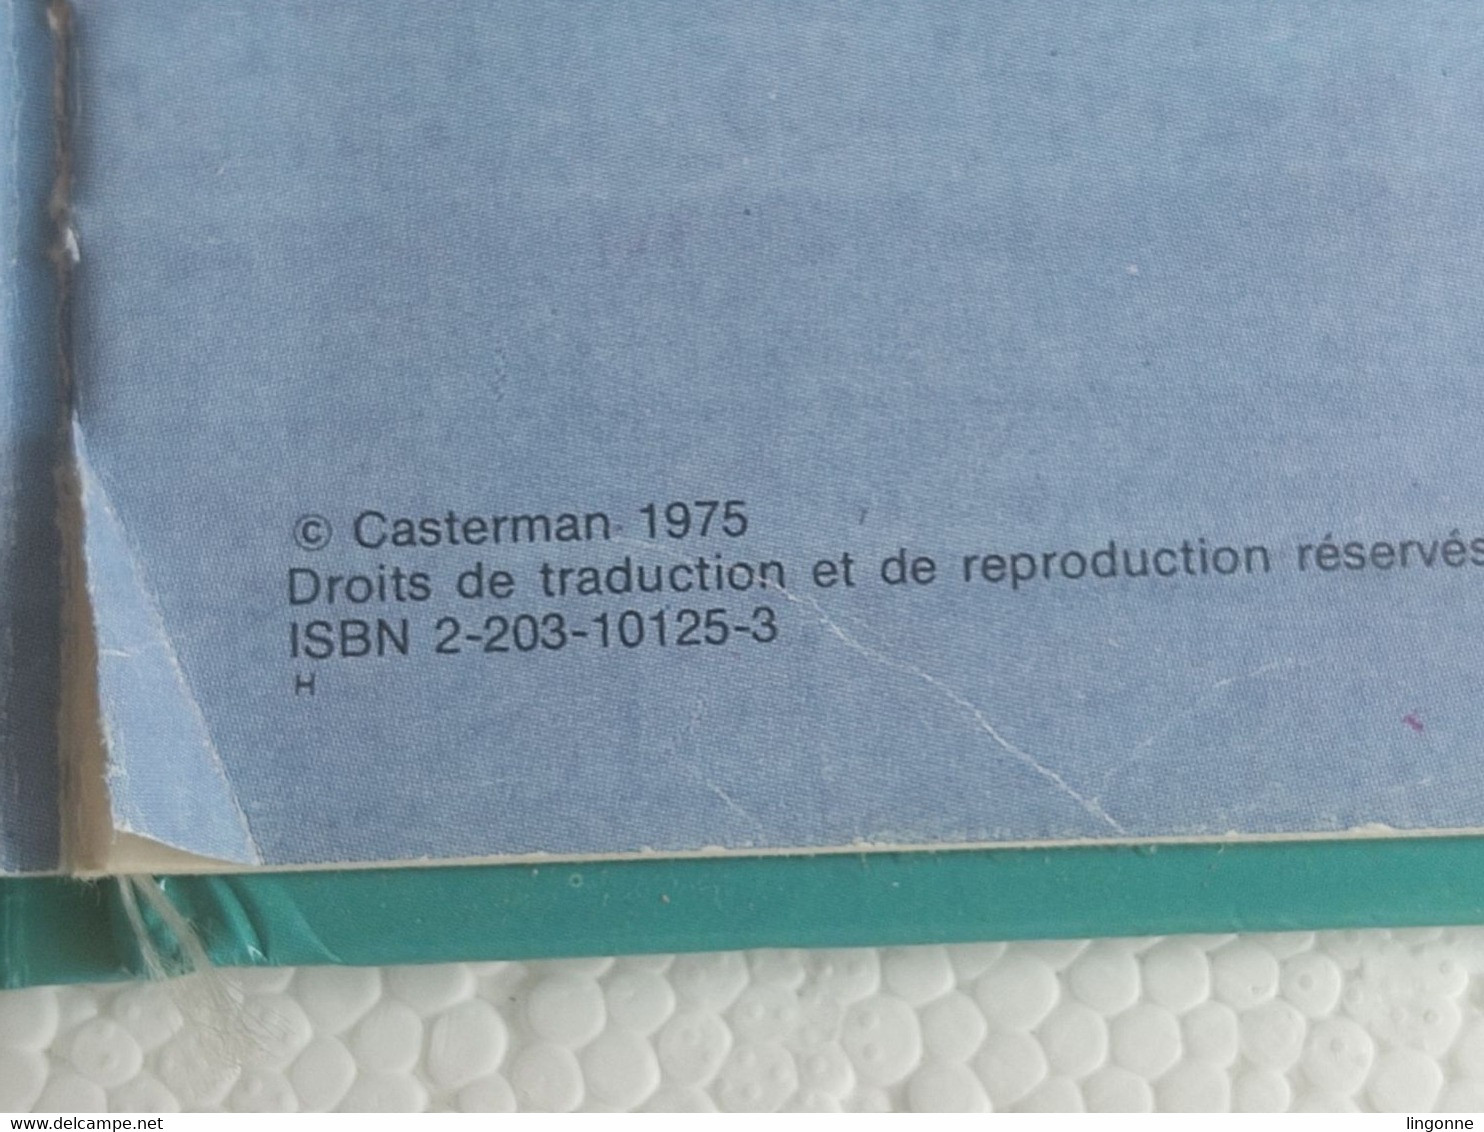 Martine Apprend à Nager - COLLECTION FARANDOLE 1975 - Casterman